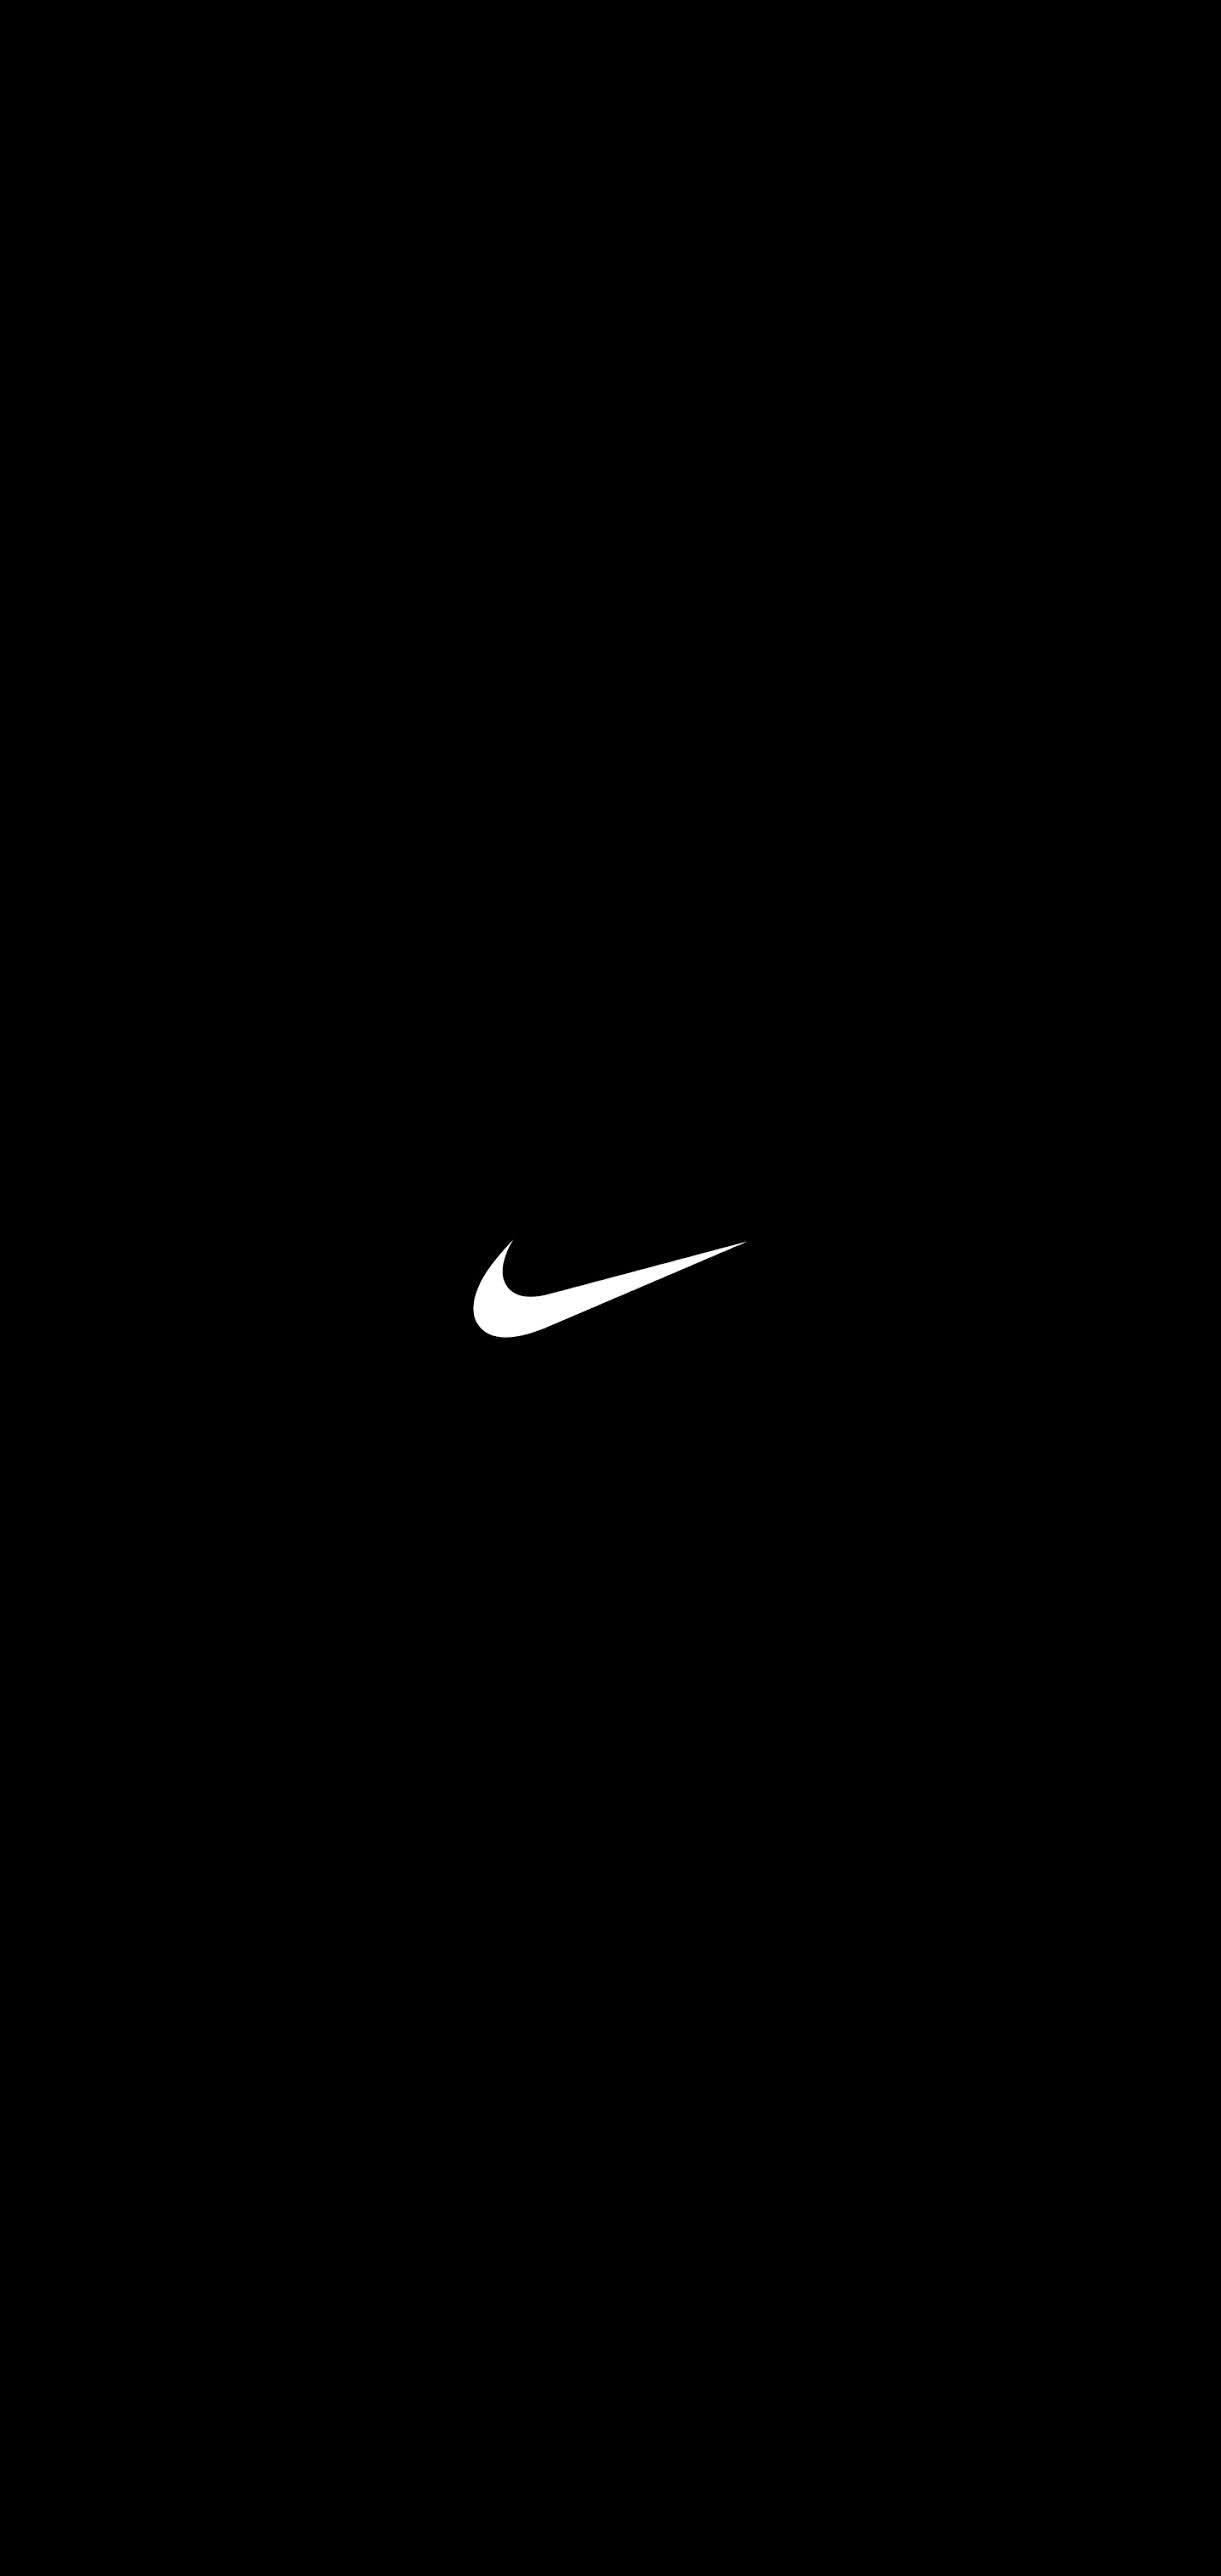 Nike Logo Black Background Wallpaper Mobcup